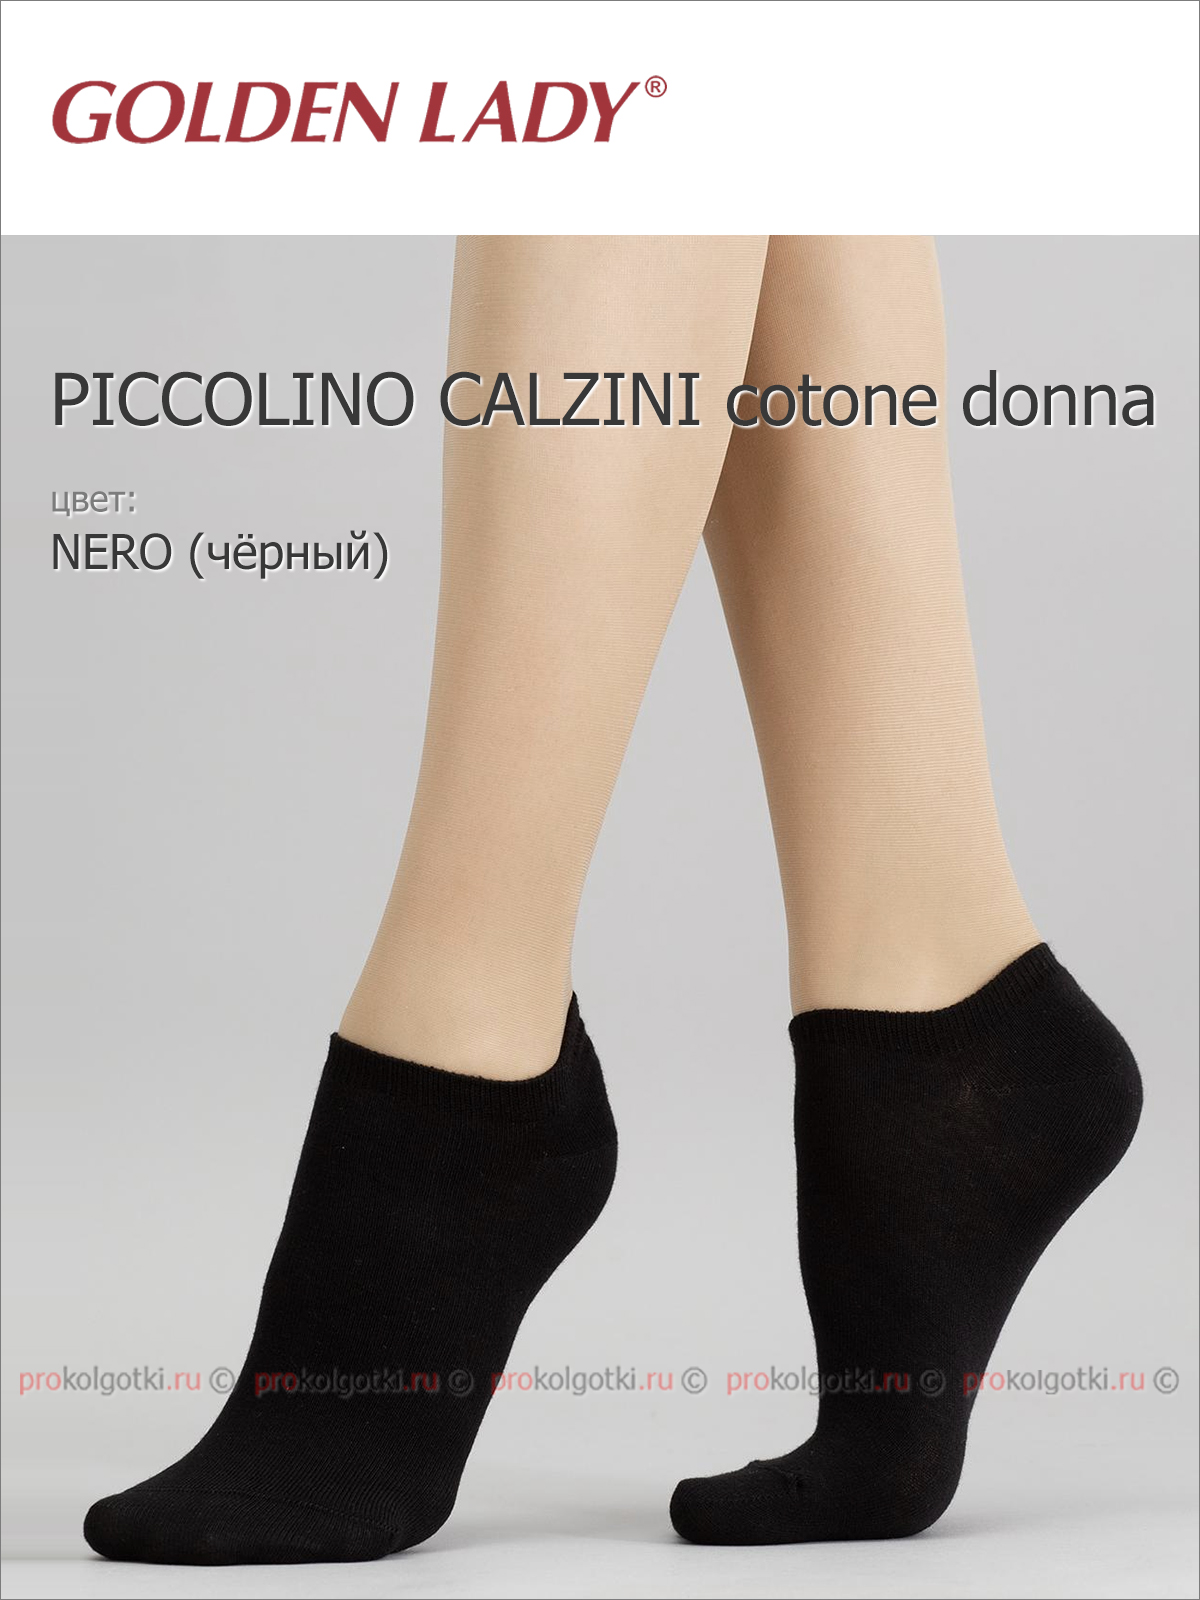 Носки Golden Lady Piccolino Calzini Cotone Donna - фото 2